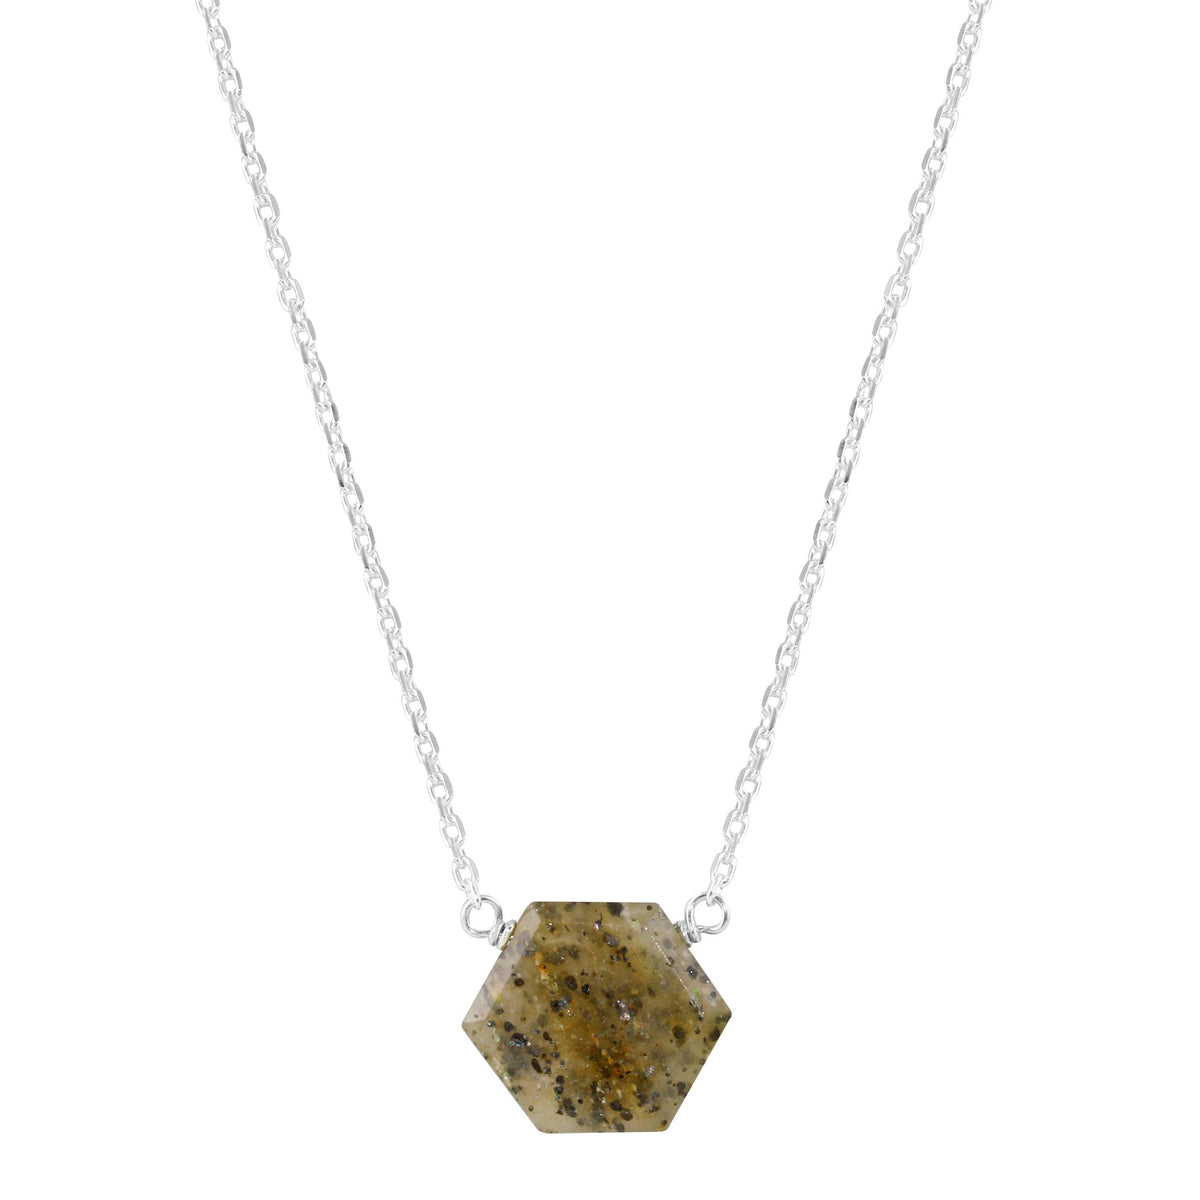 Black Sunstone hexagon necklace - sterling silver or gold filled | Little Rock Collection necklace Amanda K Lockrow